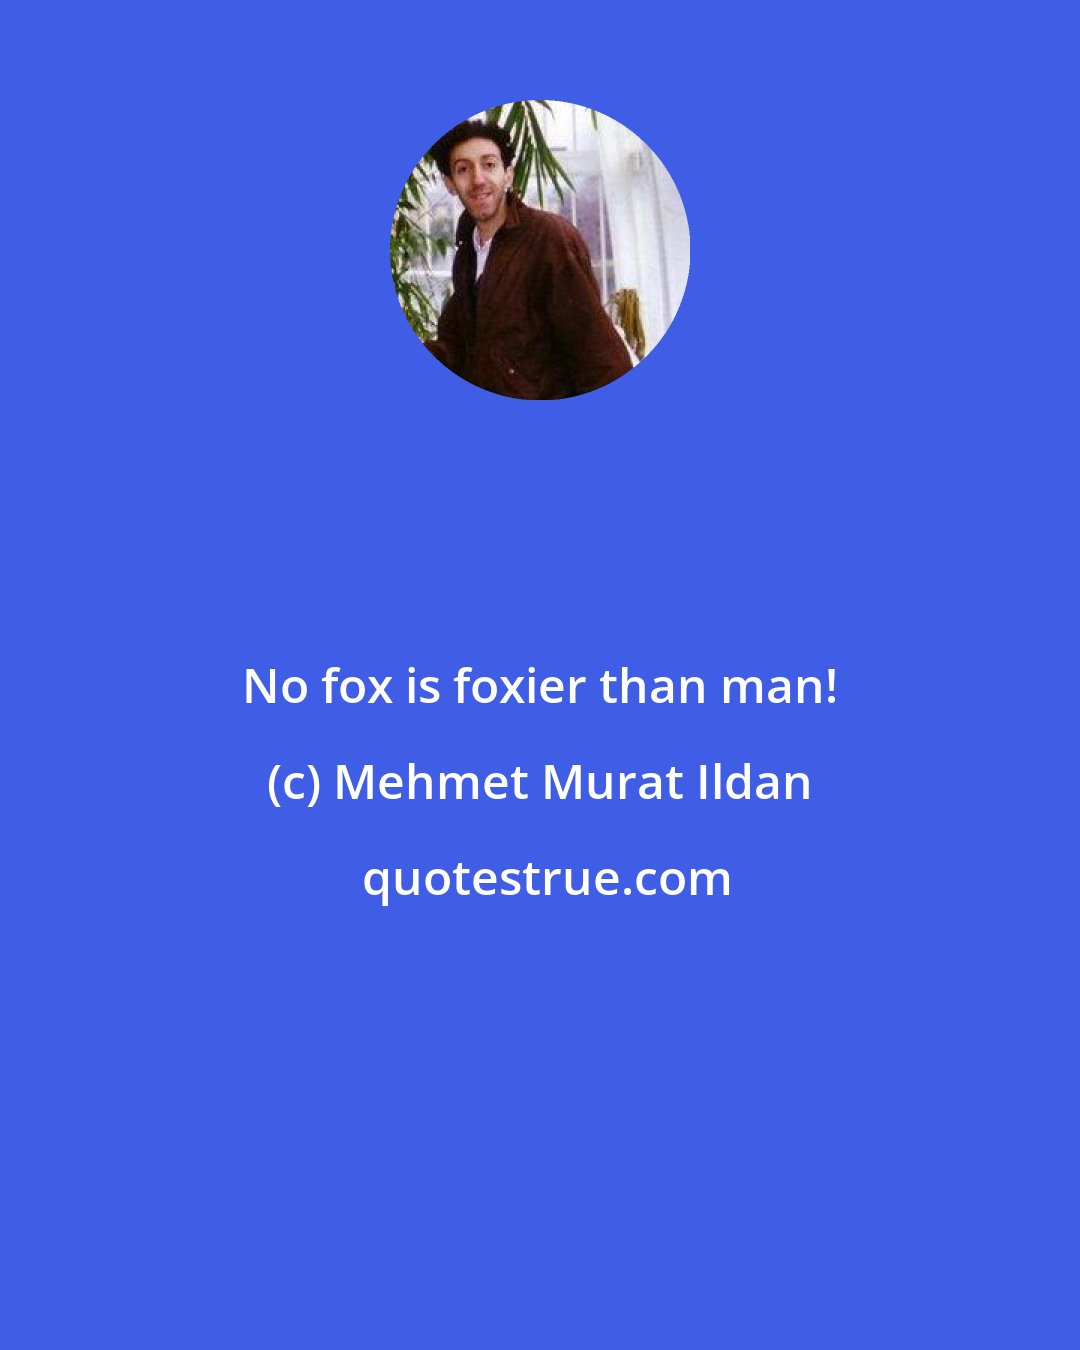 Mehmet Murat Ildan: No fox is foxier than man!